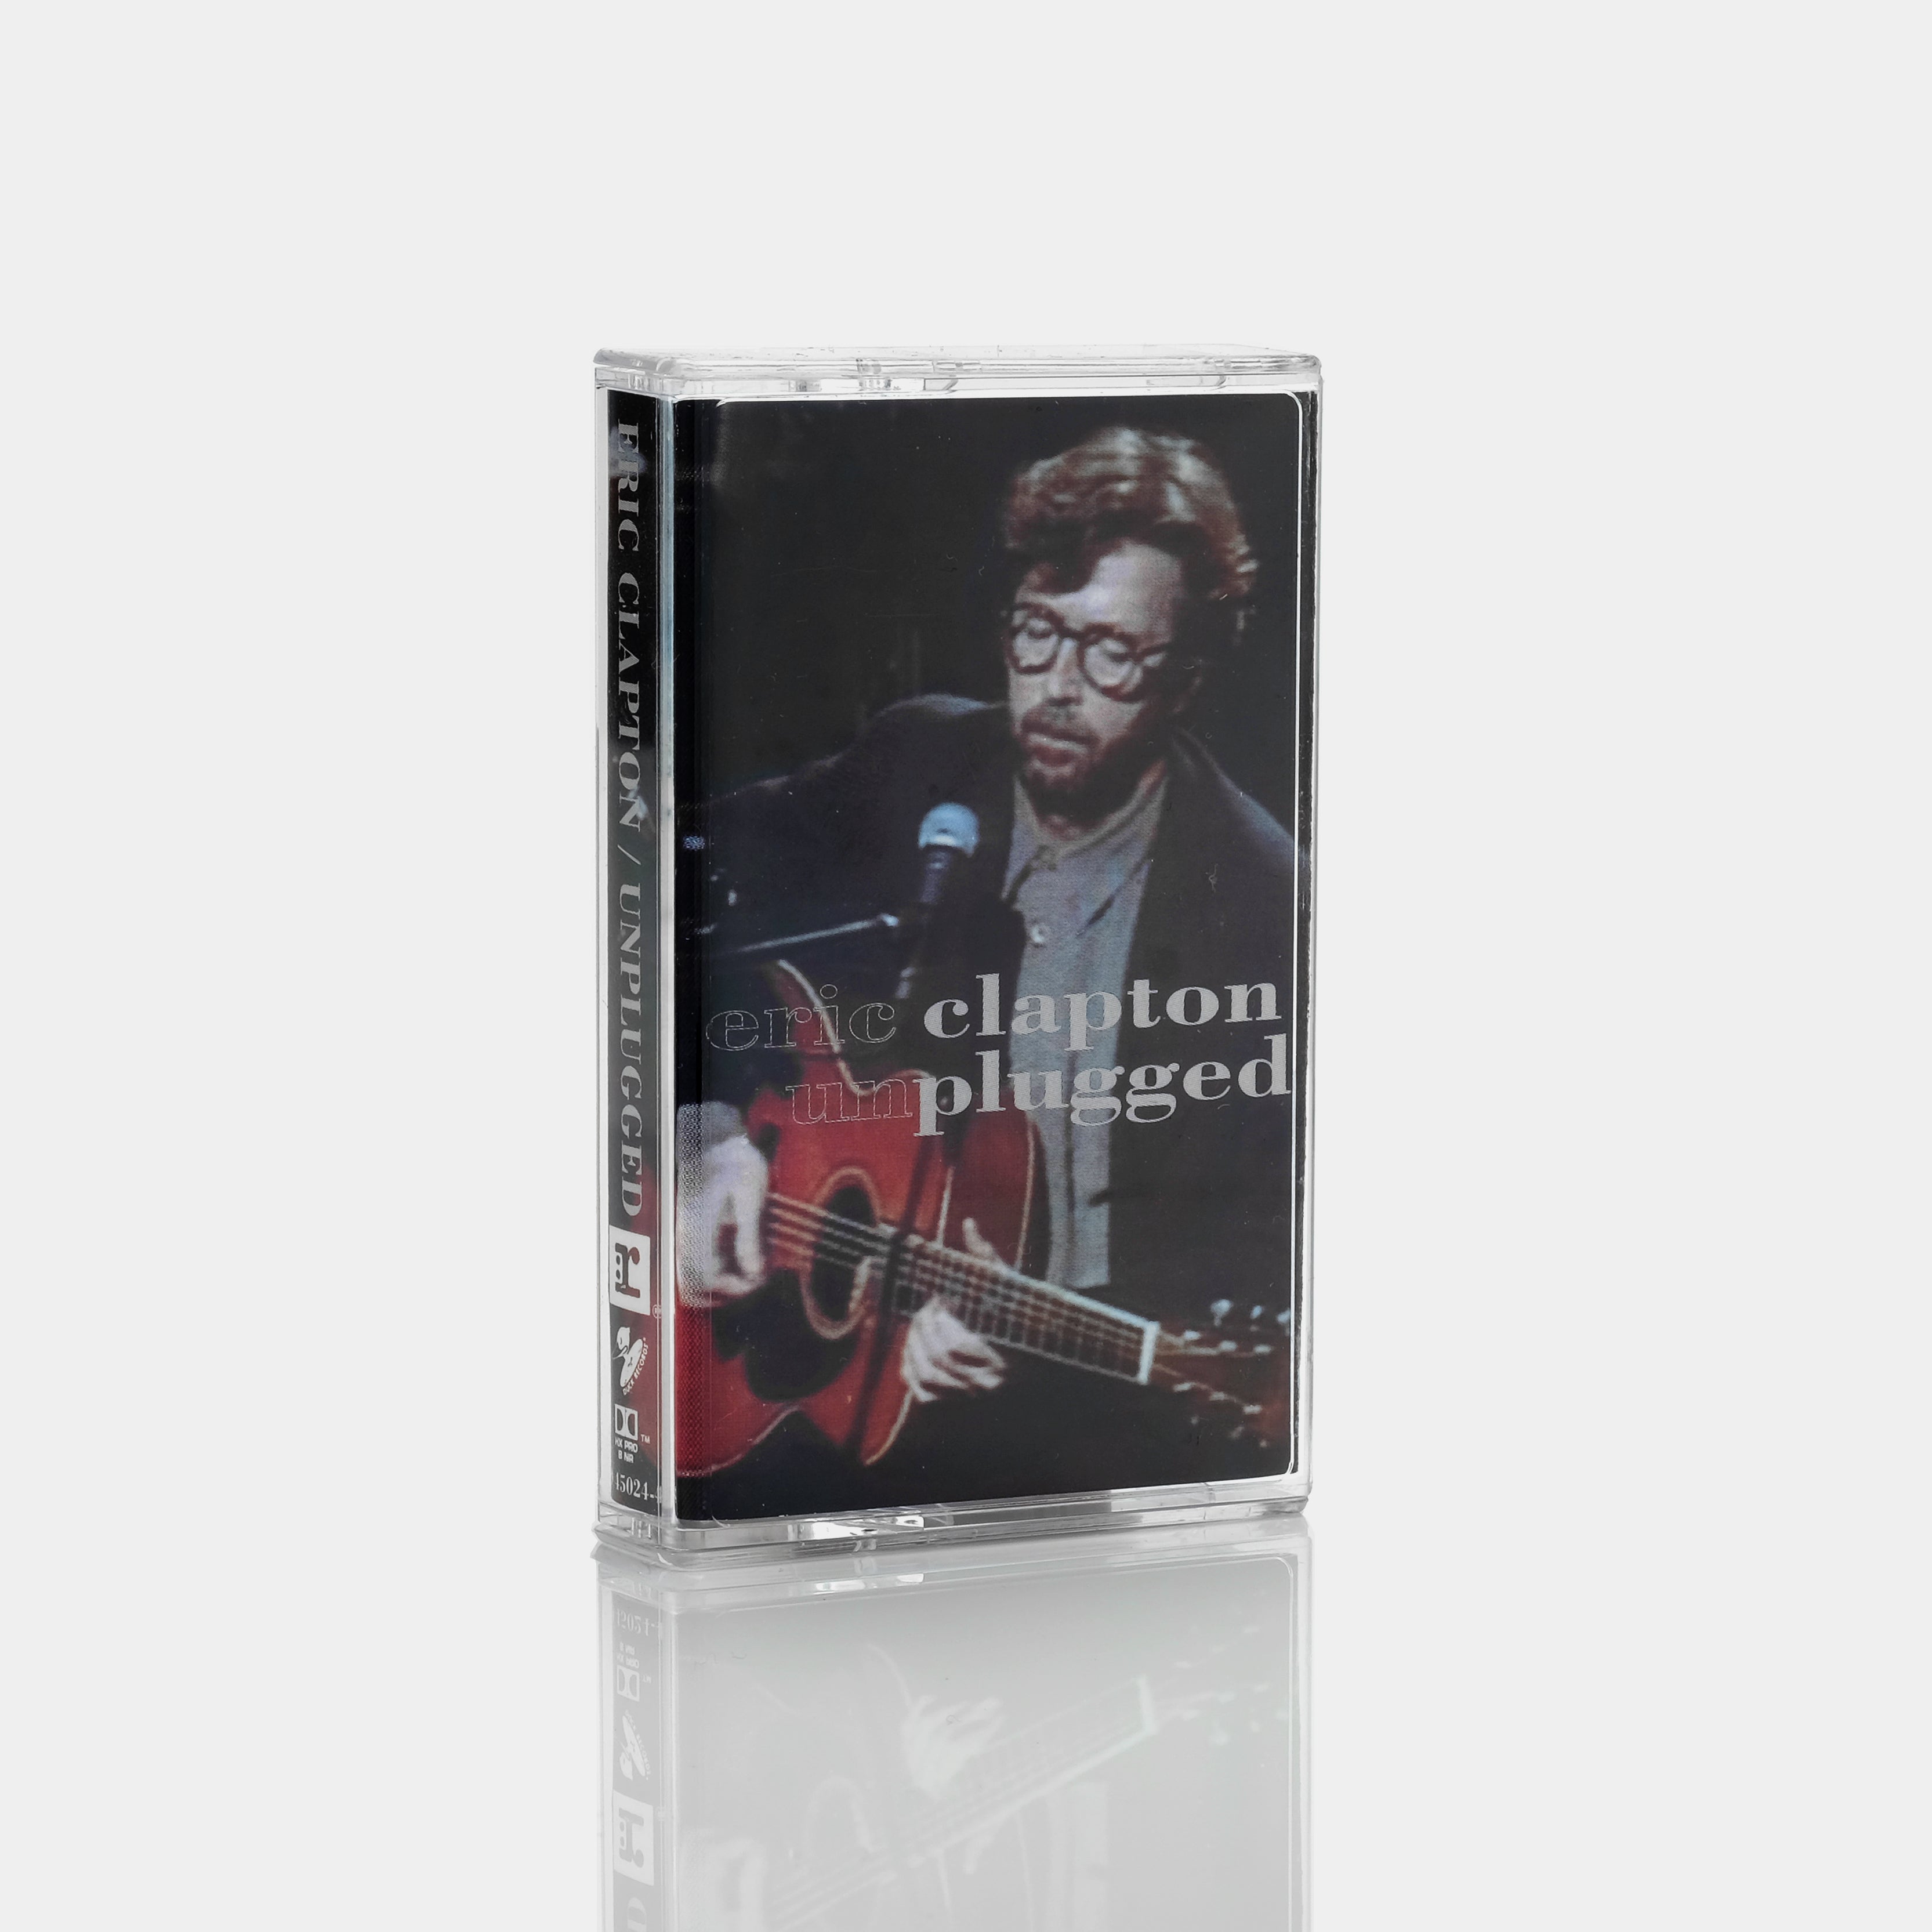 Eric Clapton - Unplugged Cassette Tape